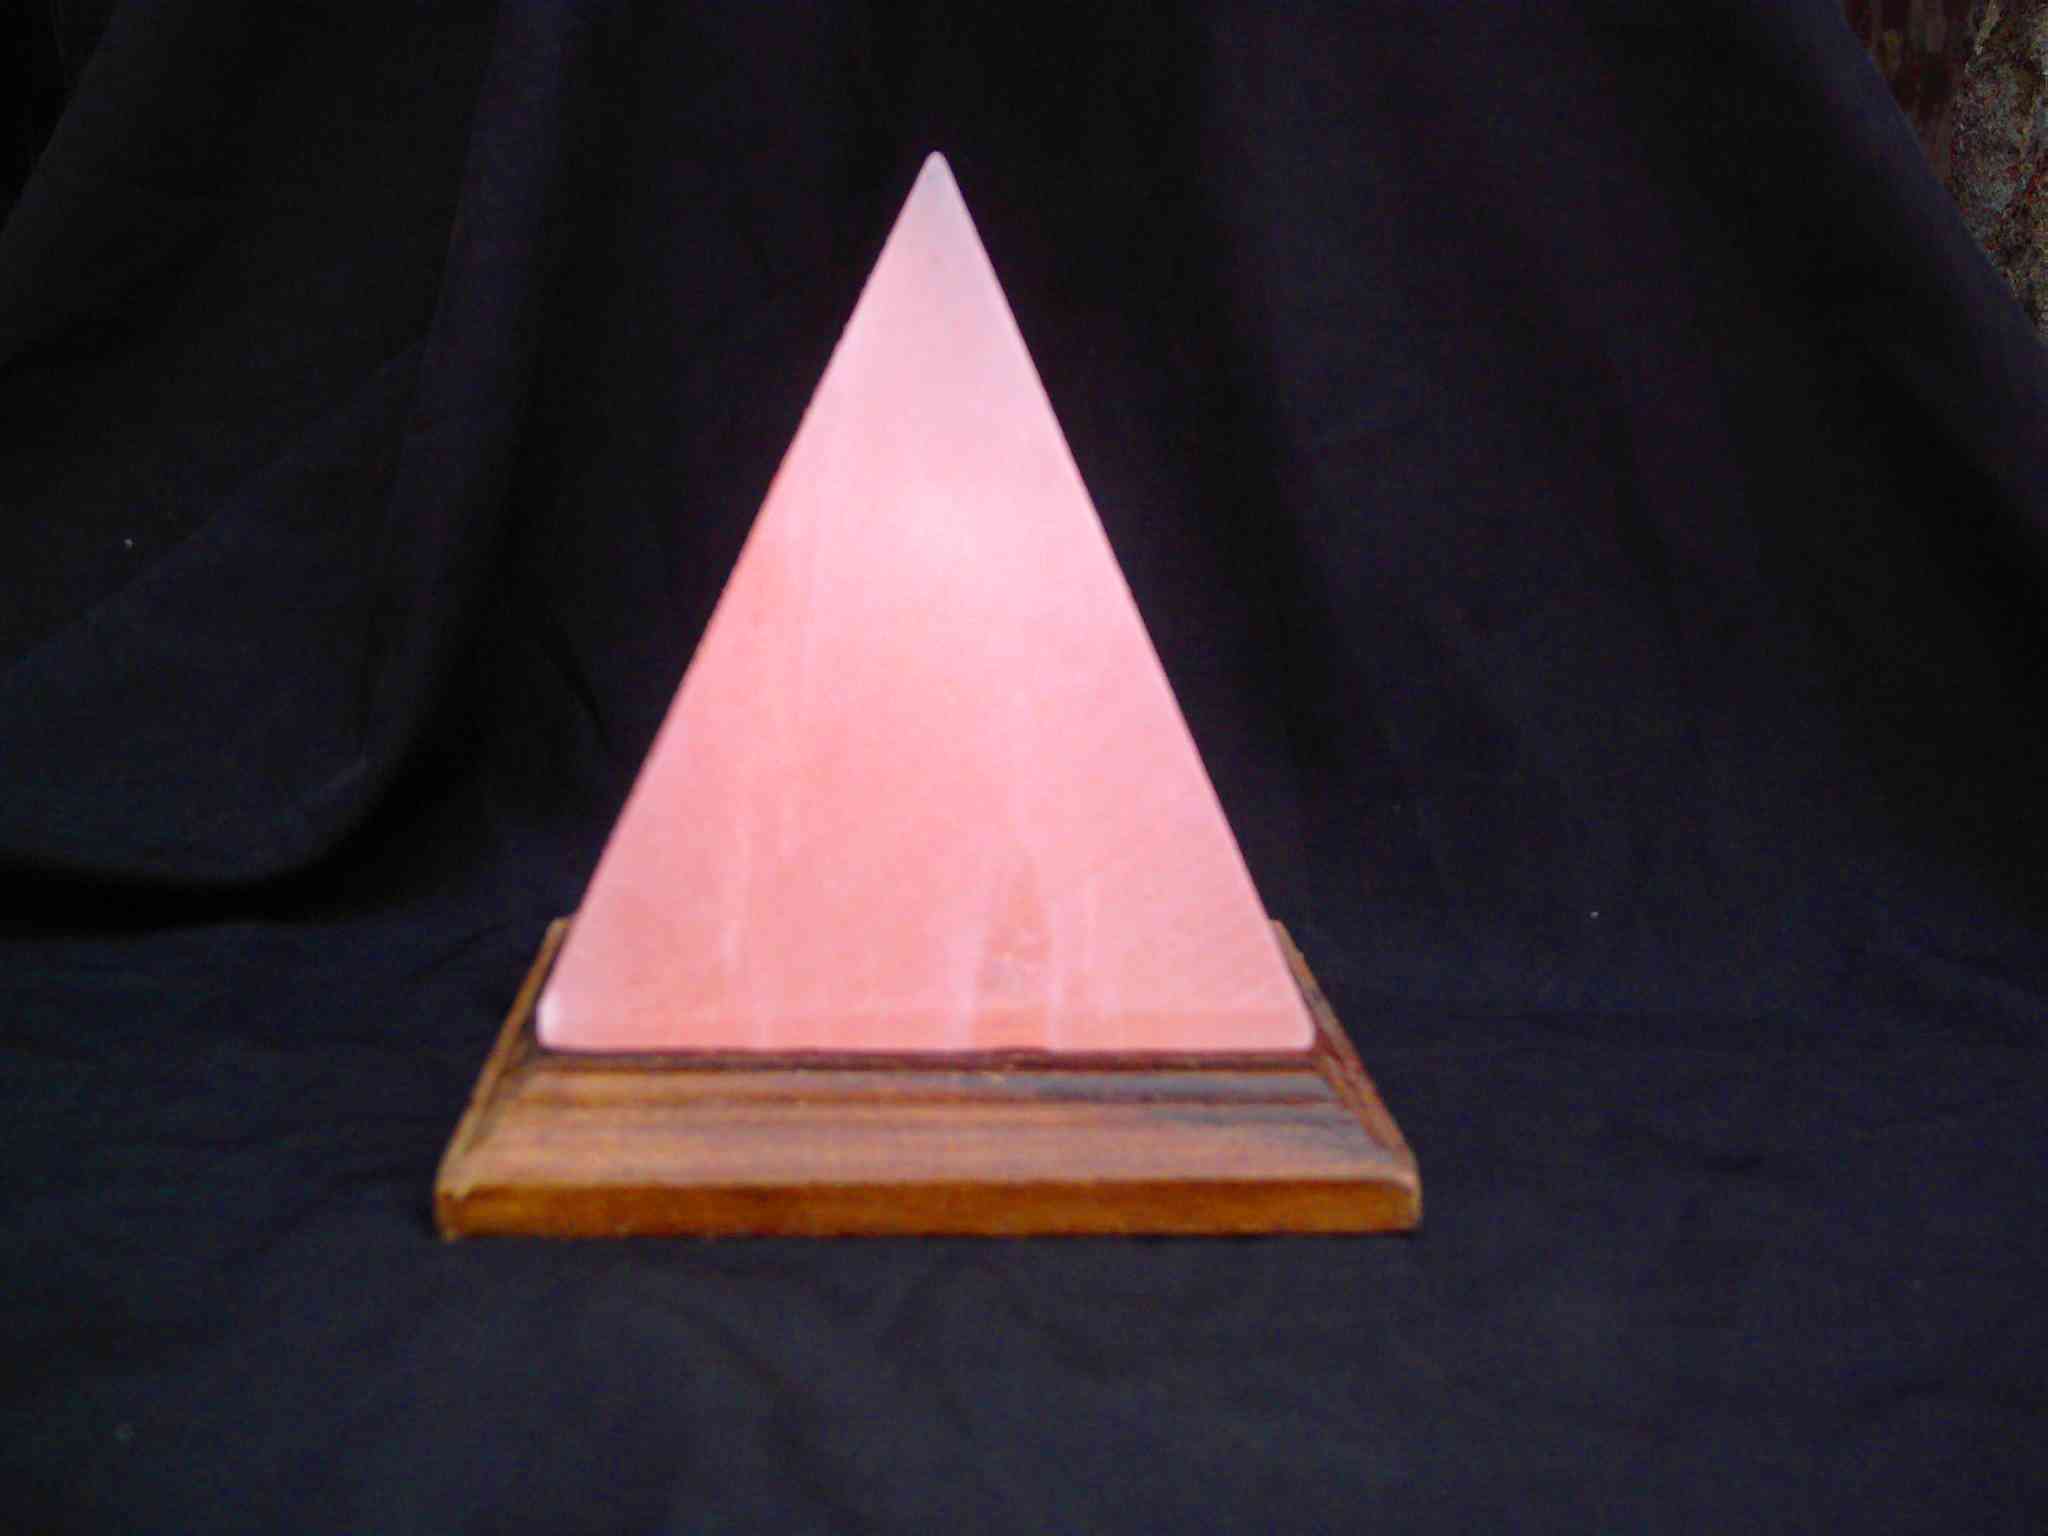  Pyramid Salt Lamp (Пирамиды соль лампа)